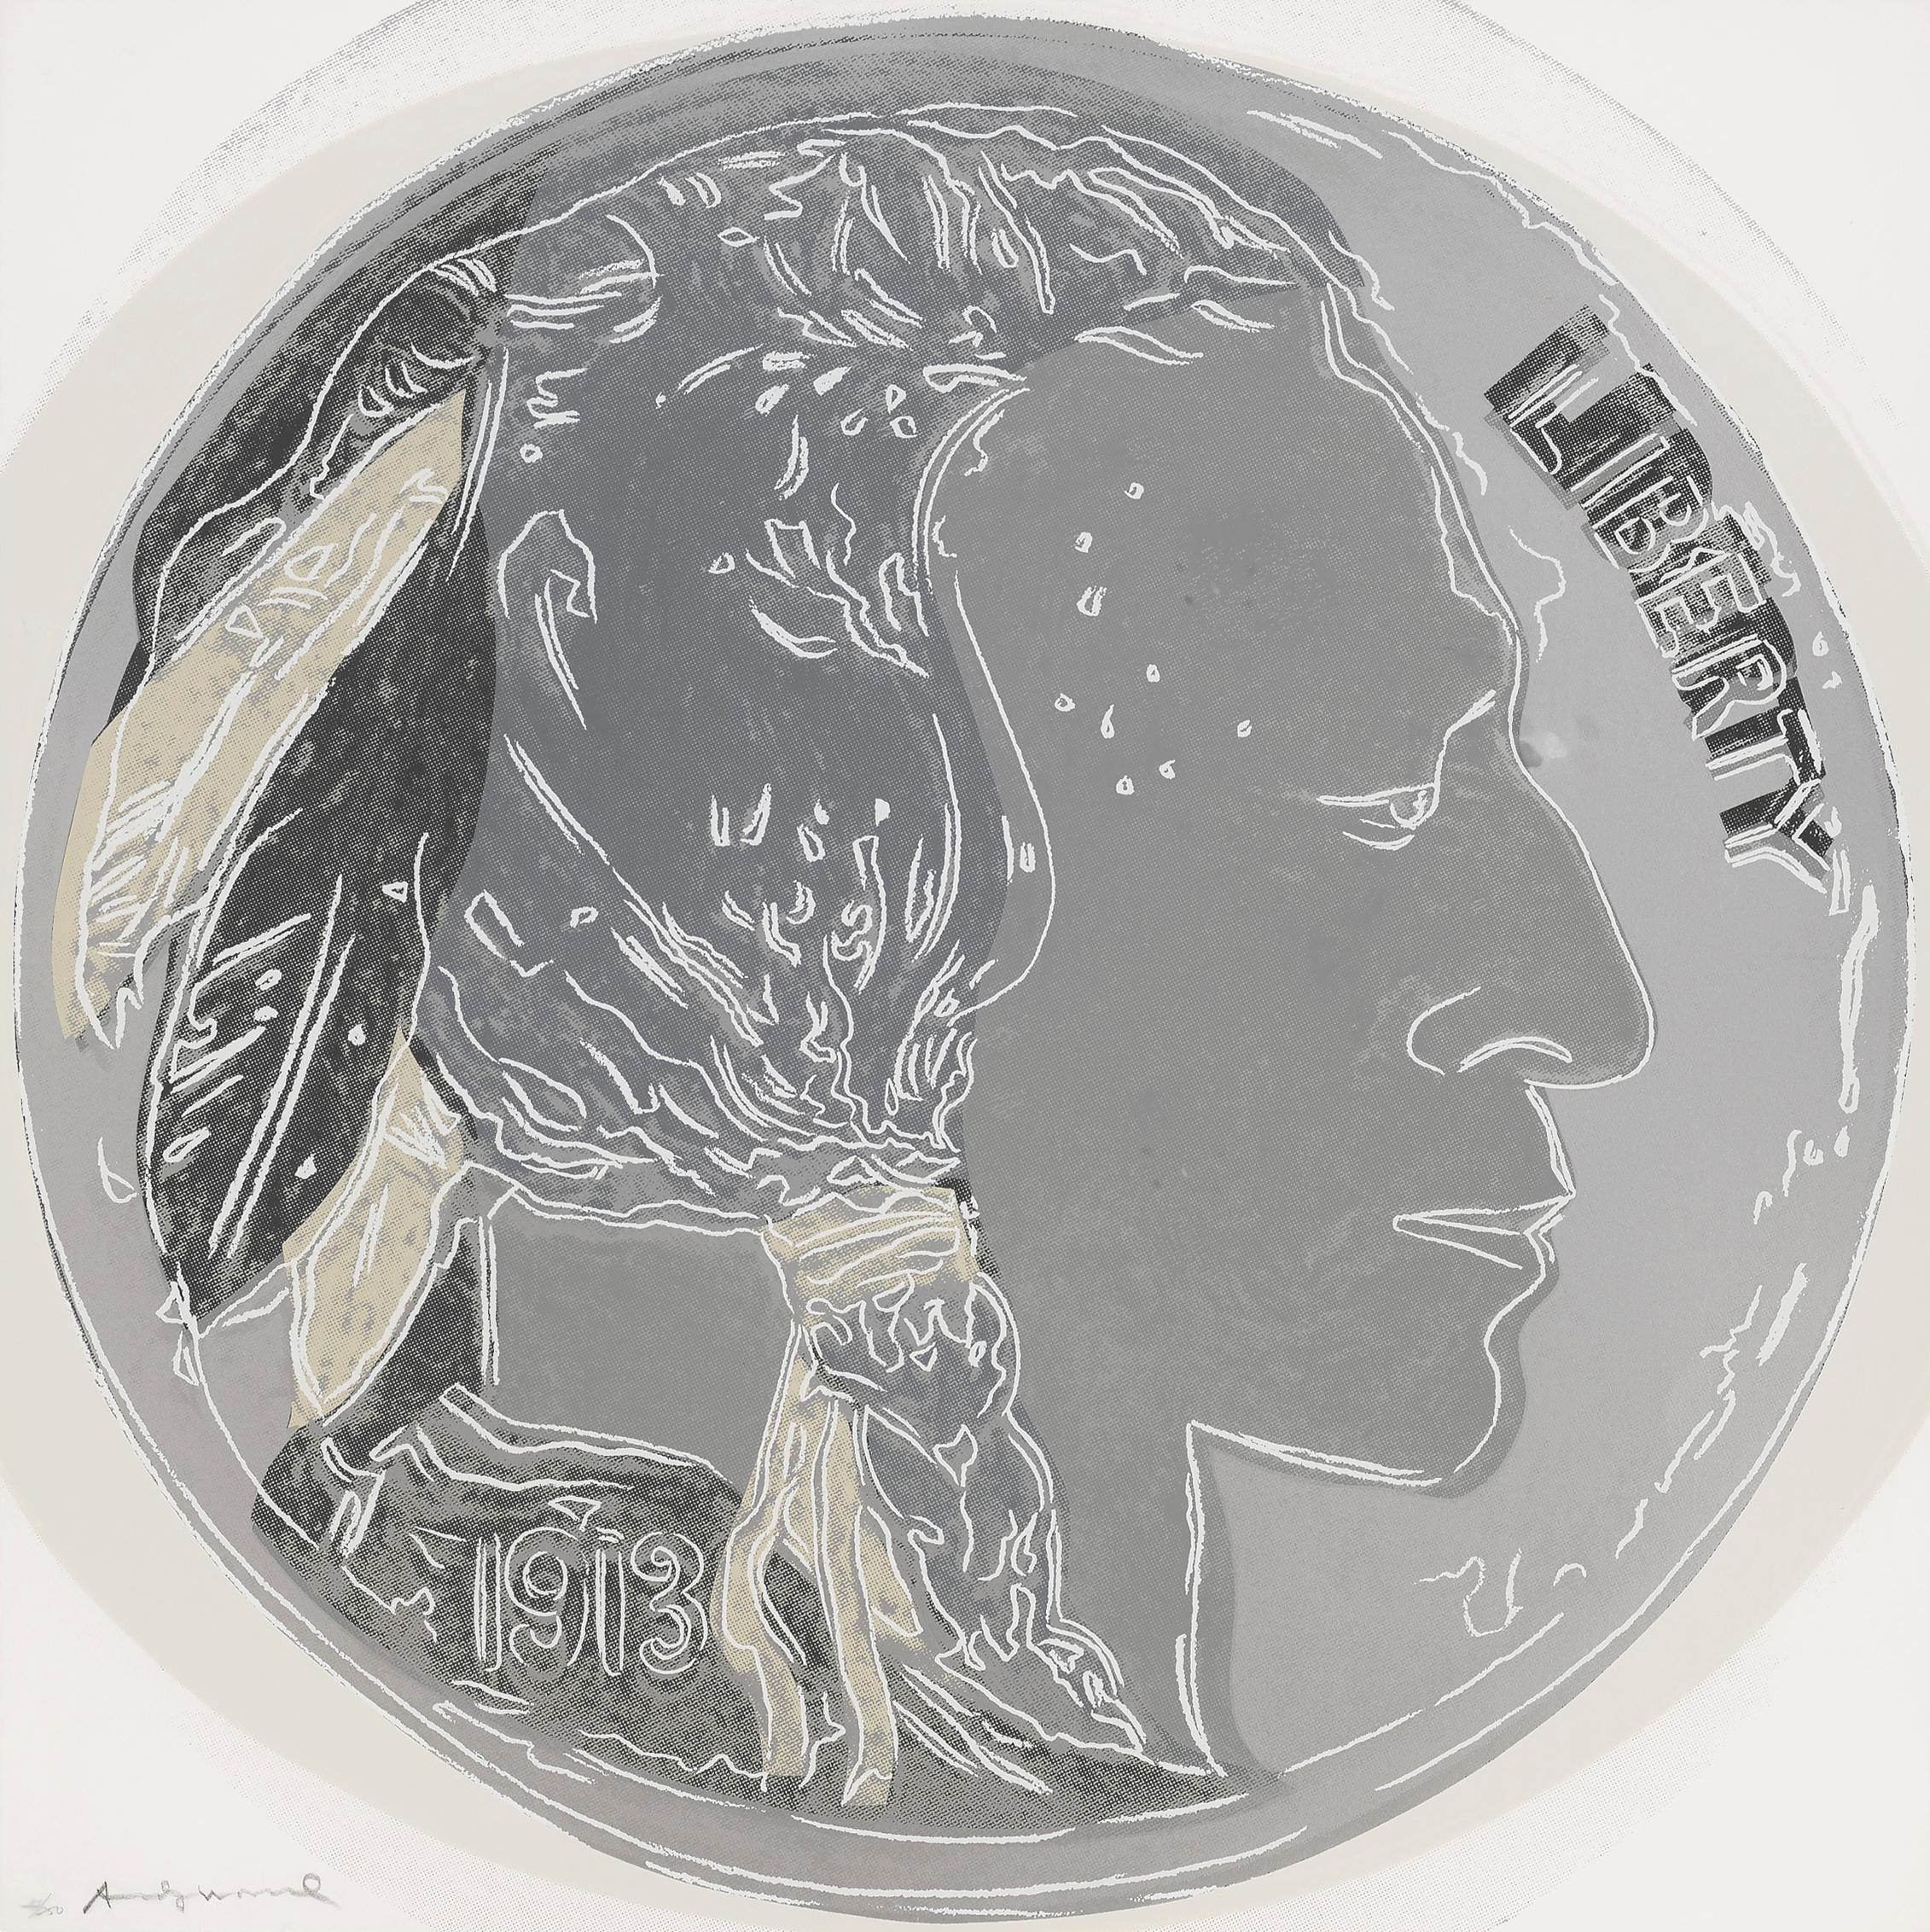 Andy Warhol Portrait Print - INDIAN HEAD NICKEL FS II.385